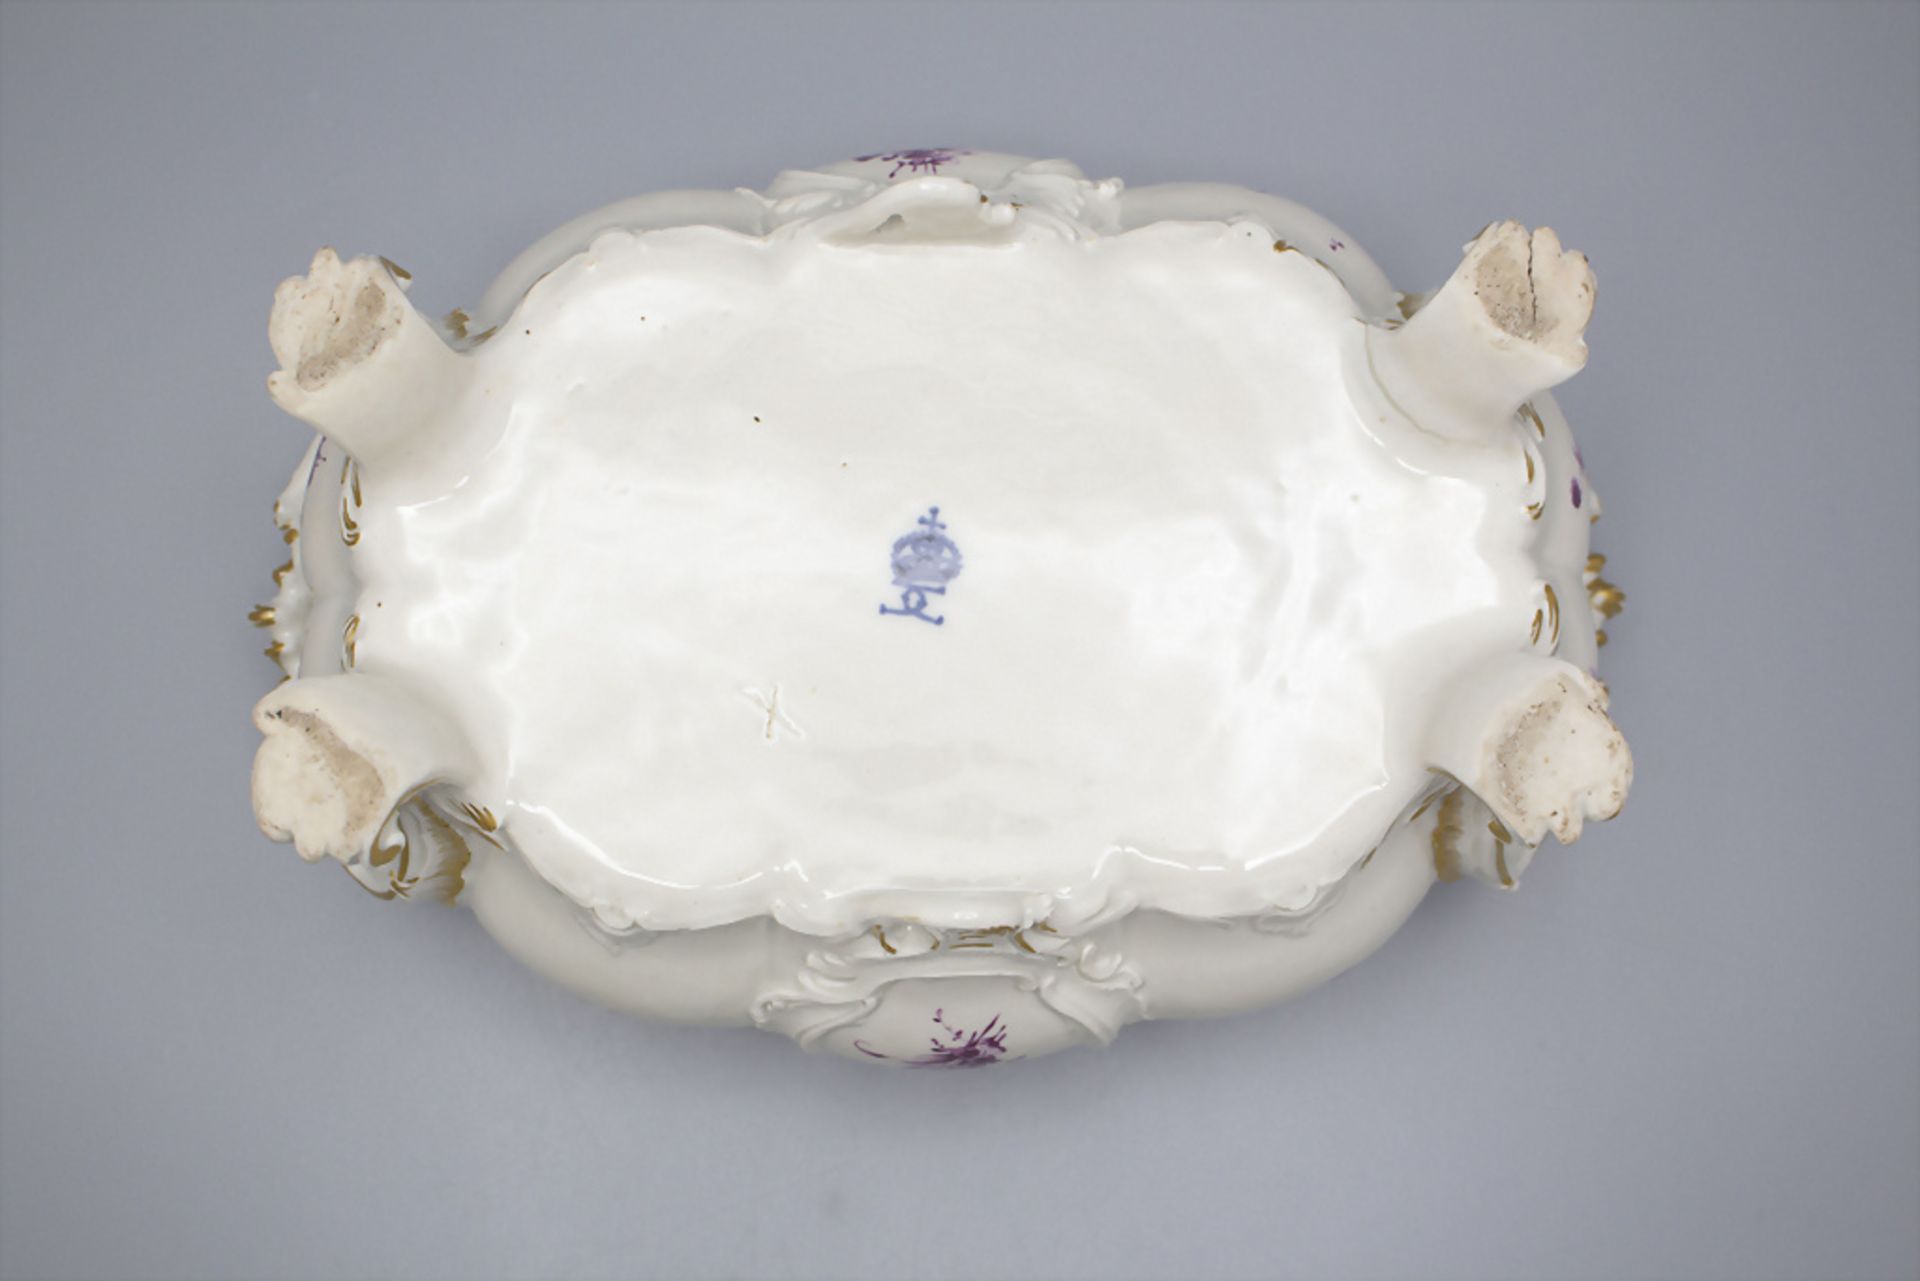 Porzellan Deckelterrine / A lidded porcelaine tureen, Ludwigsburg, um 1765 - Image 6 of 7